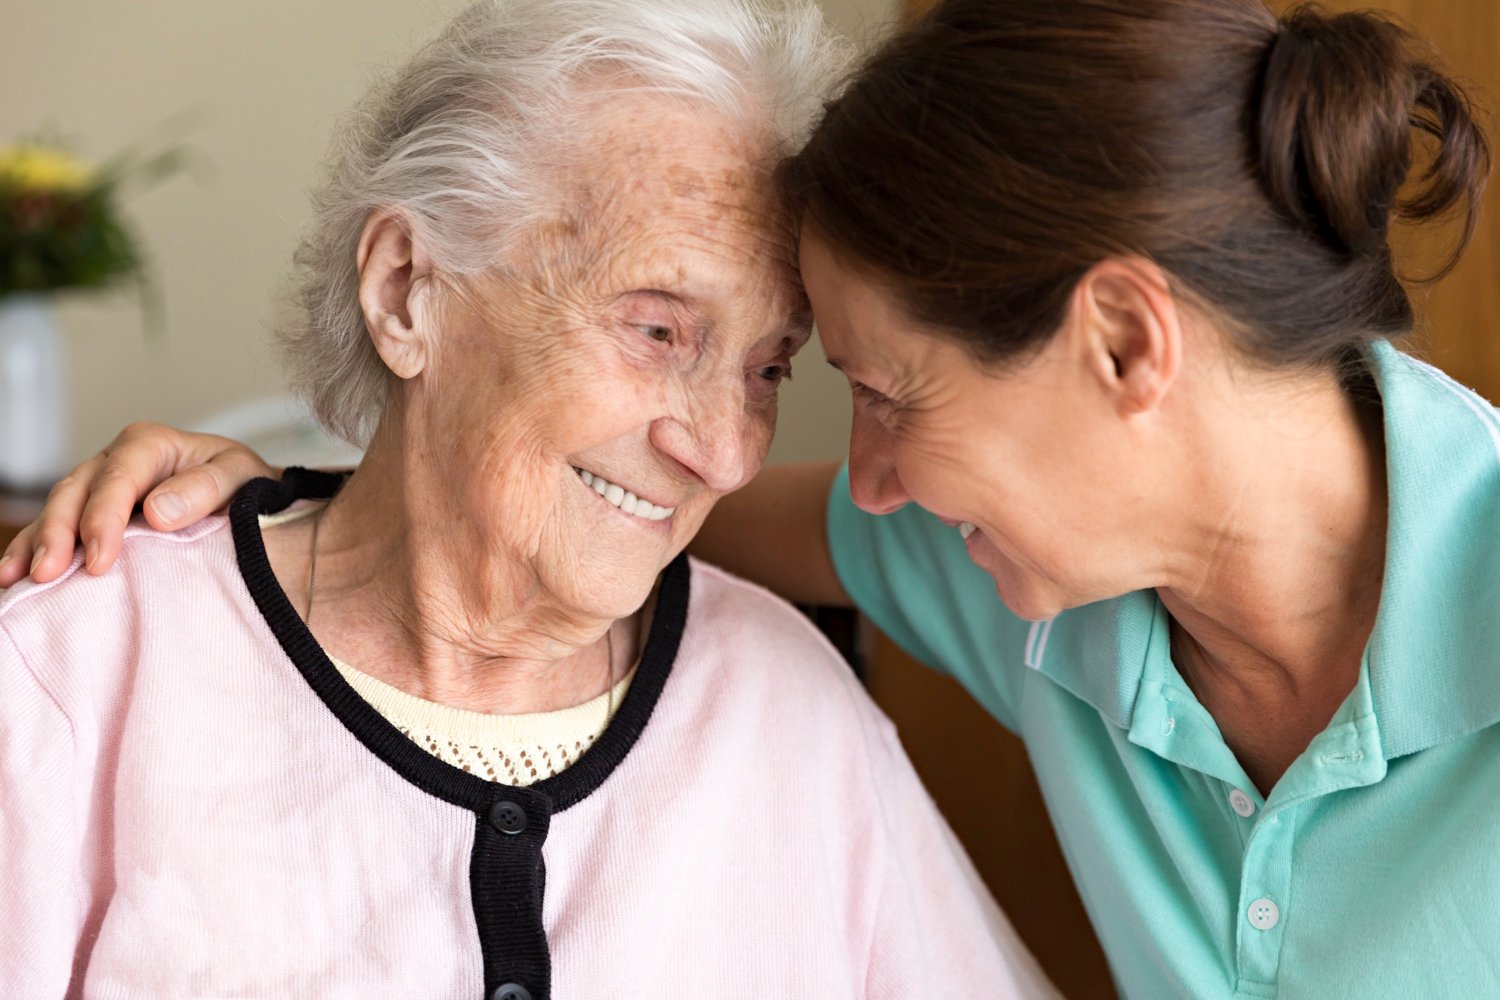 A staff member embracing a senior resident